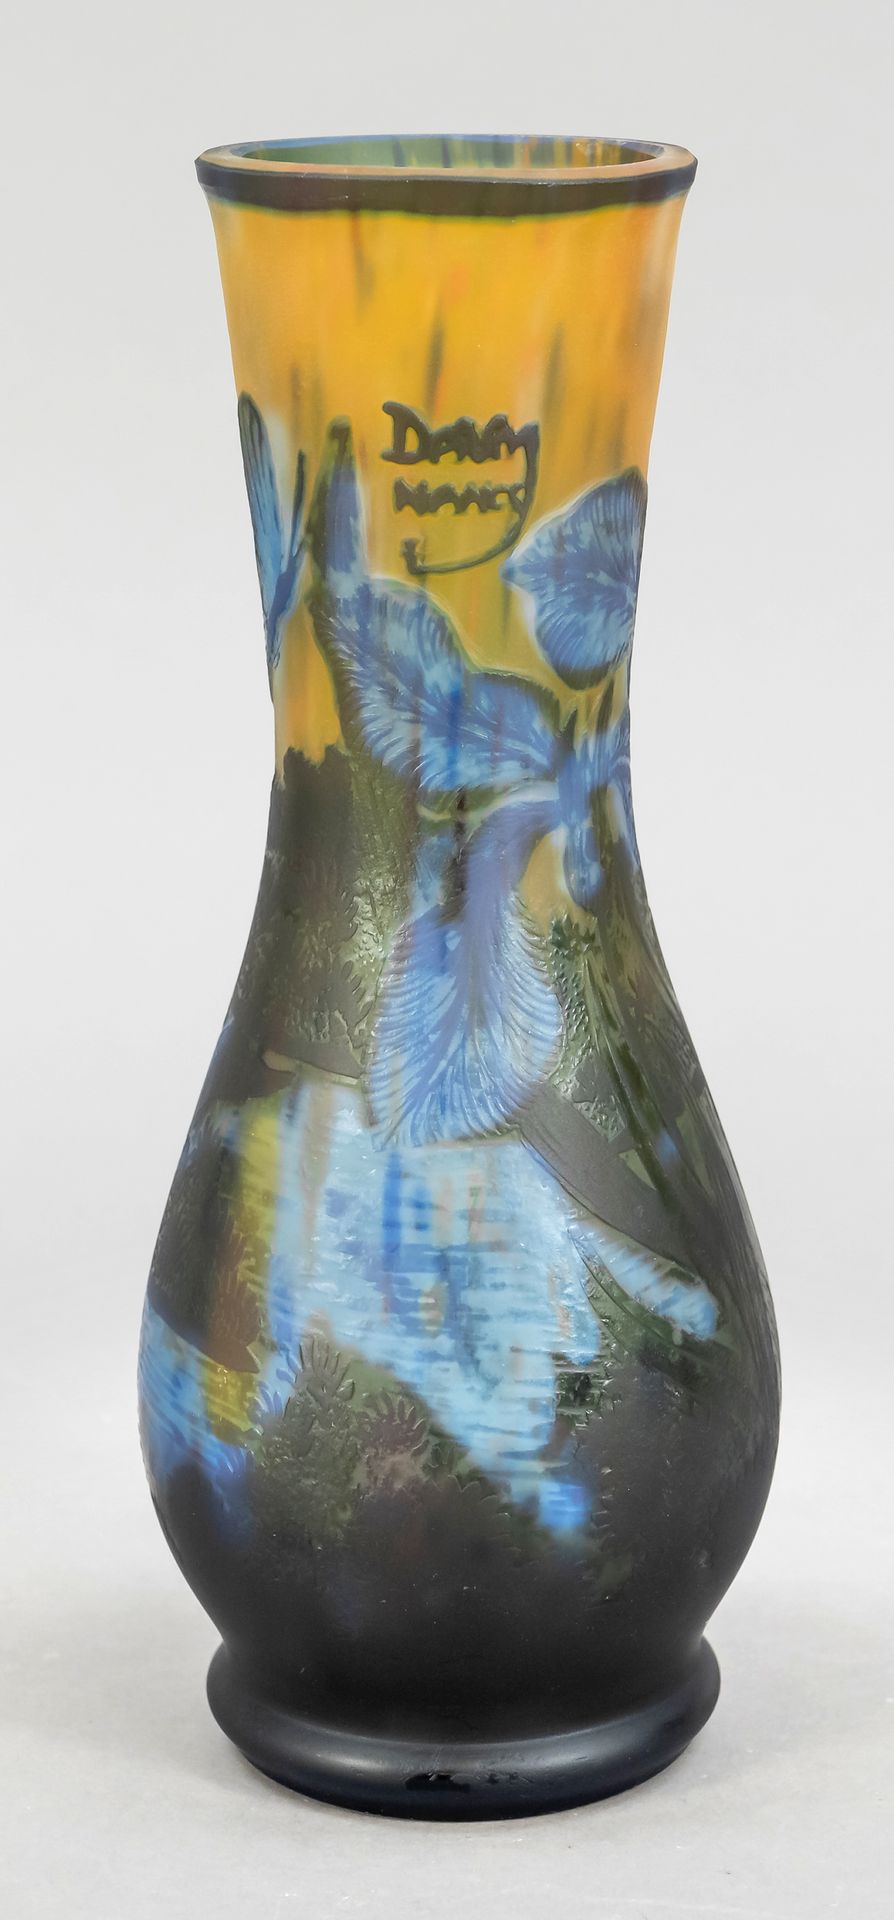 Null 花瓶，20世纪，圆形支架，水滴状瓶身，透明玻璃与多色融为一体，蚀刻的花卉装饰，标有Daum Nancy，高23.5厘米